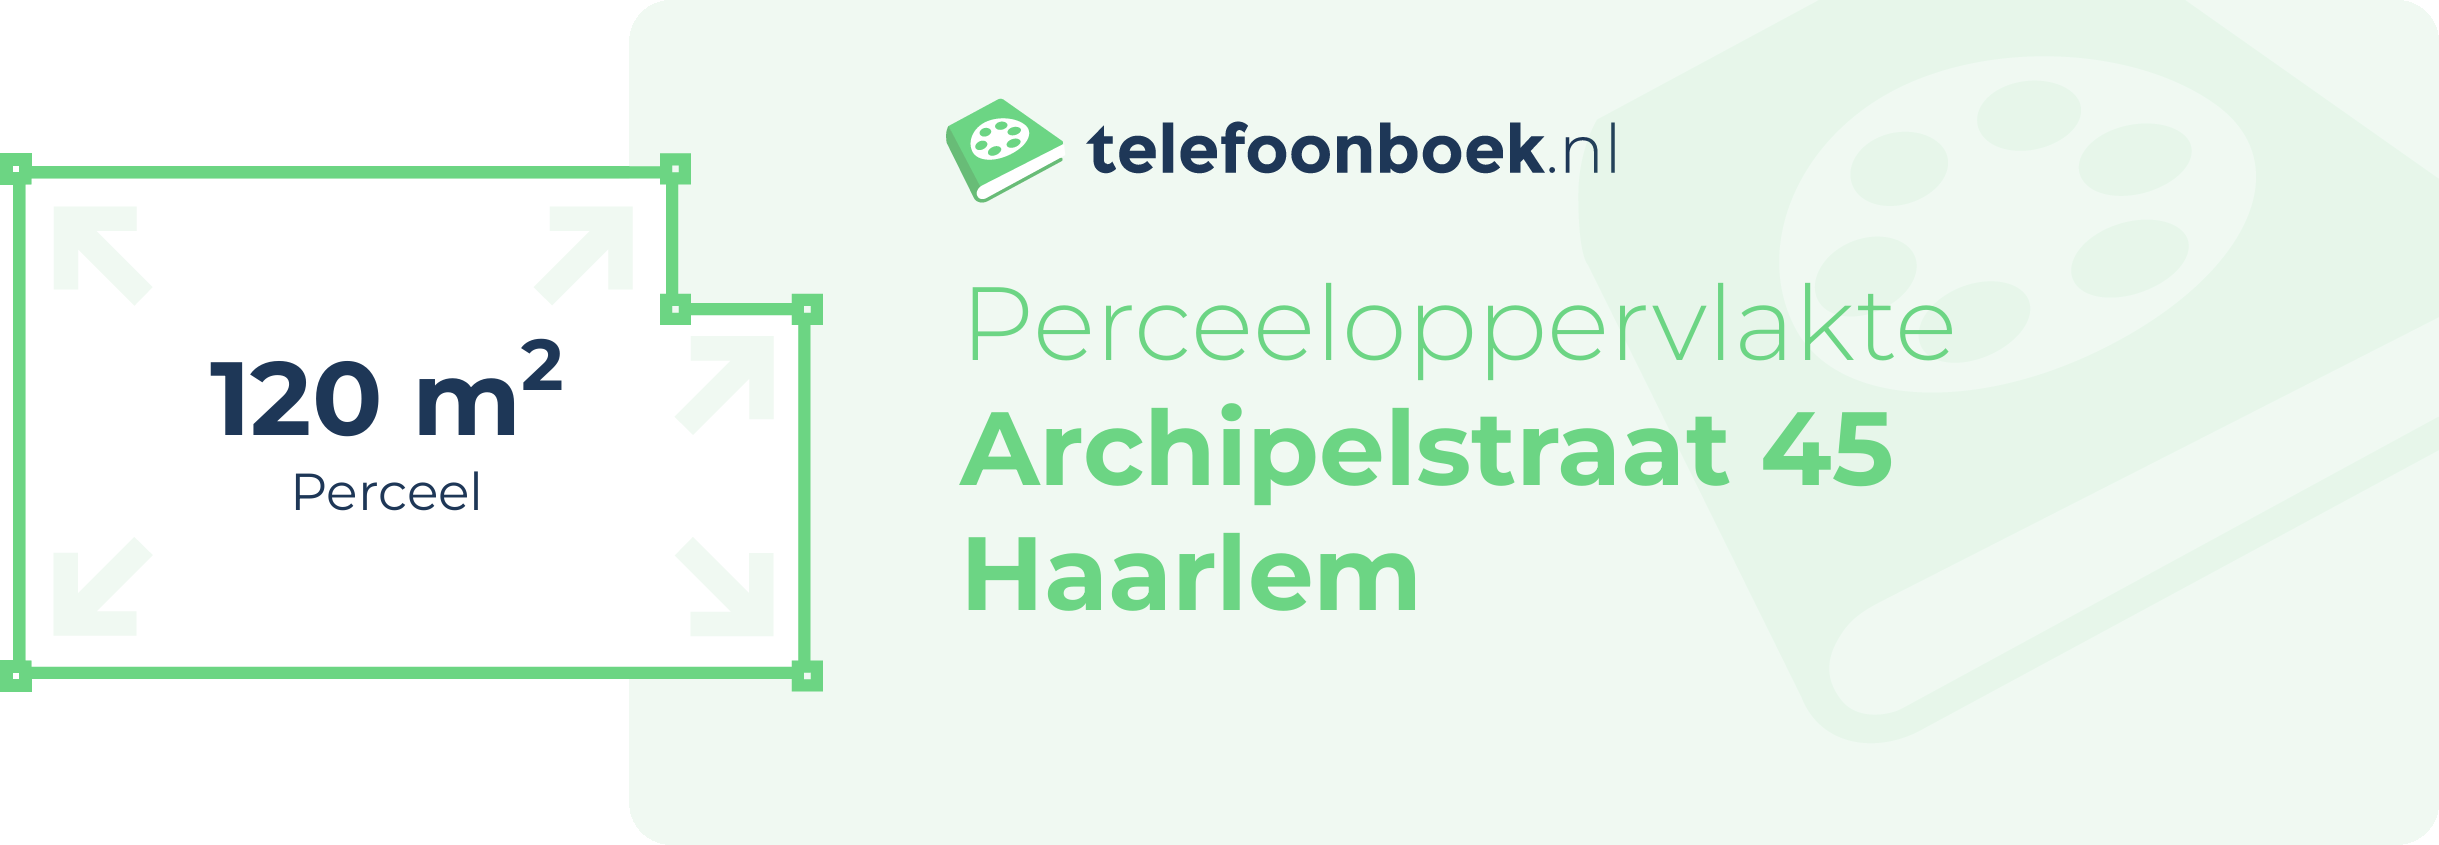 Perceeloppervlakte Archipelstraat 45 Haarlem